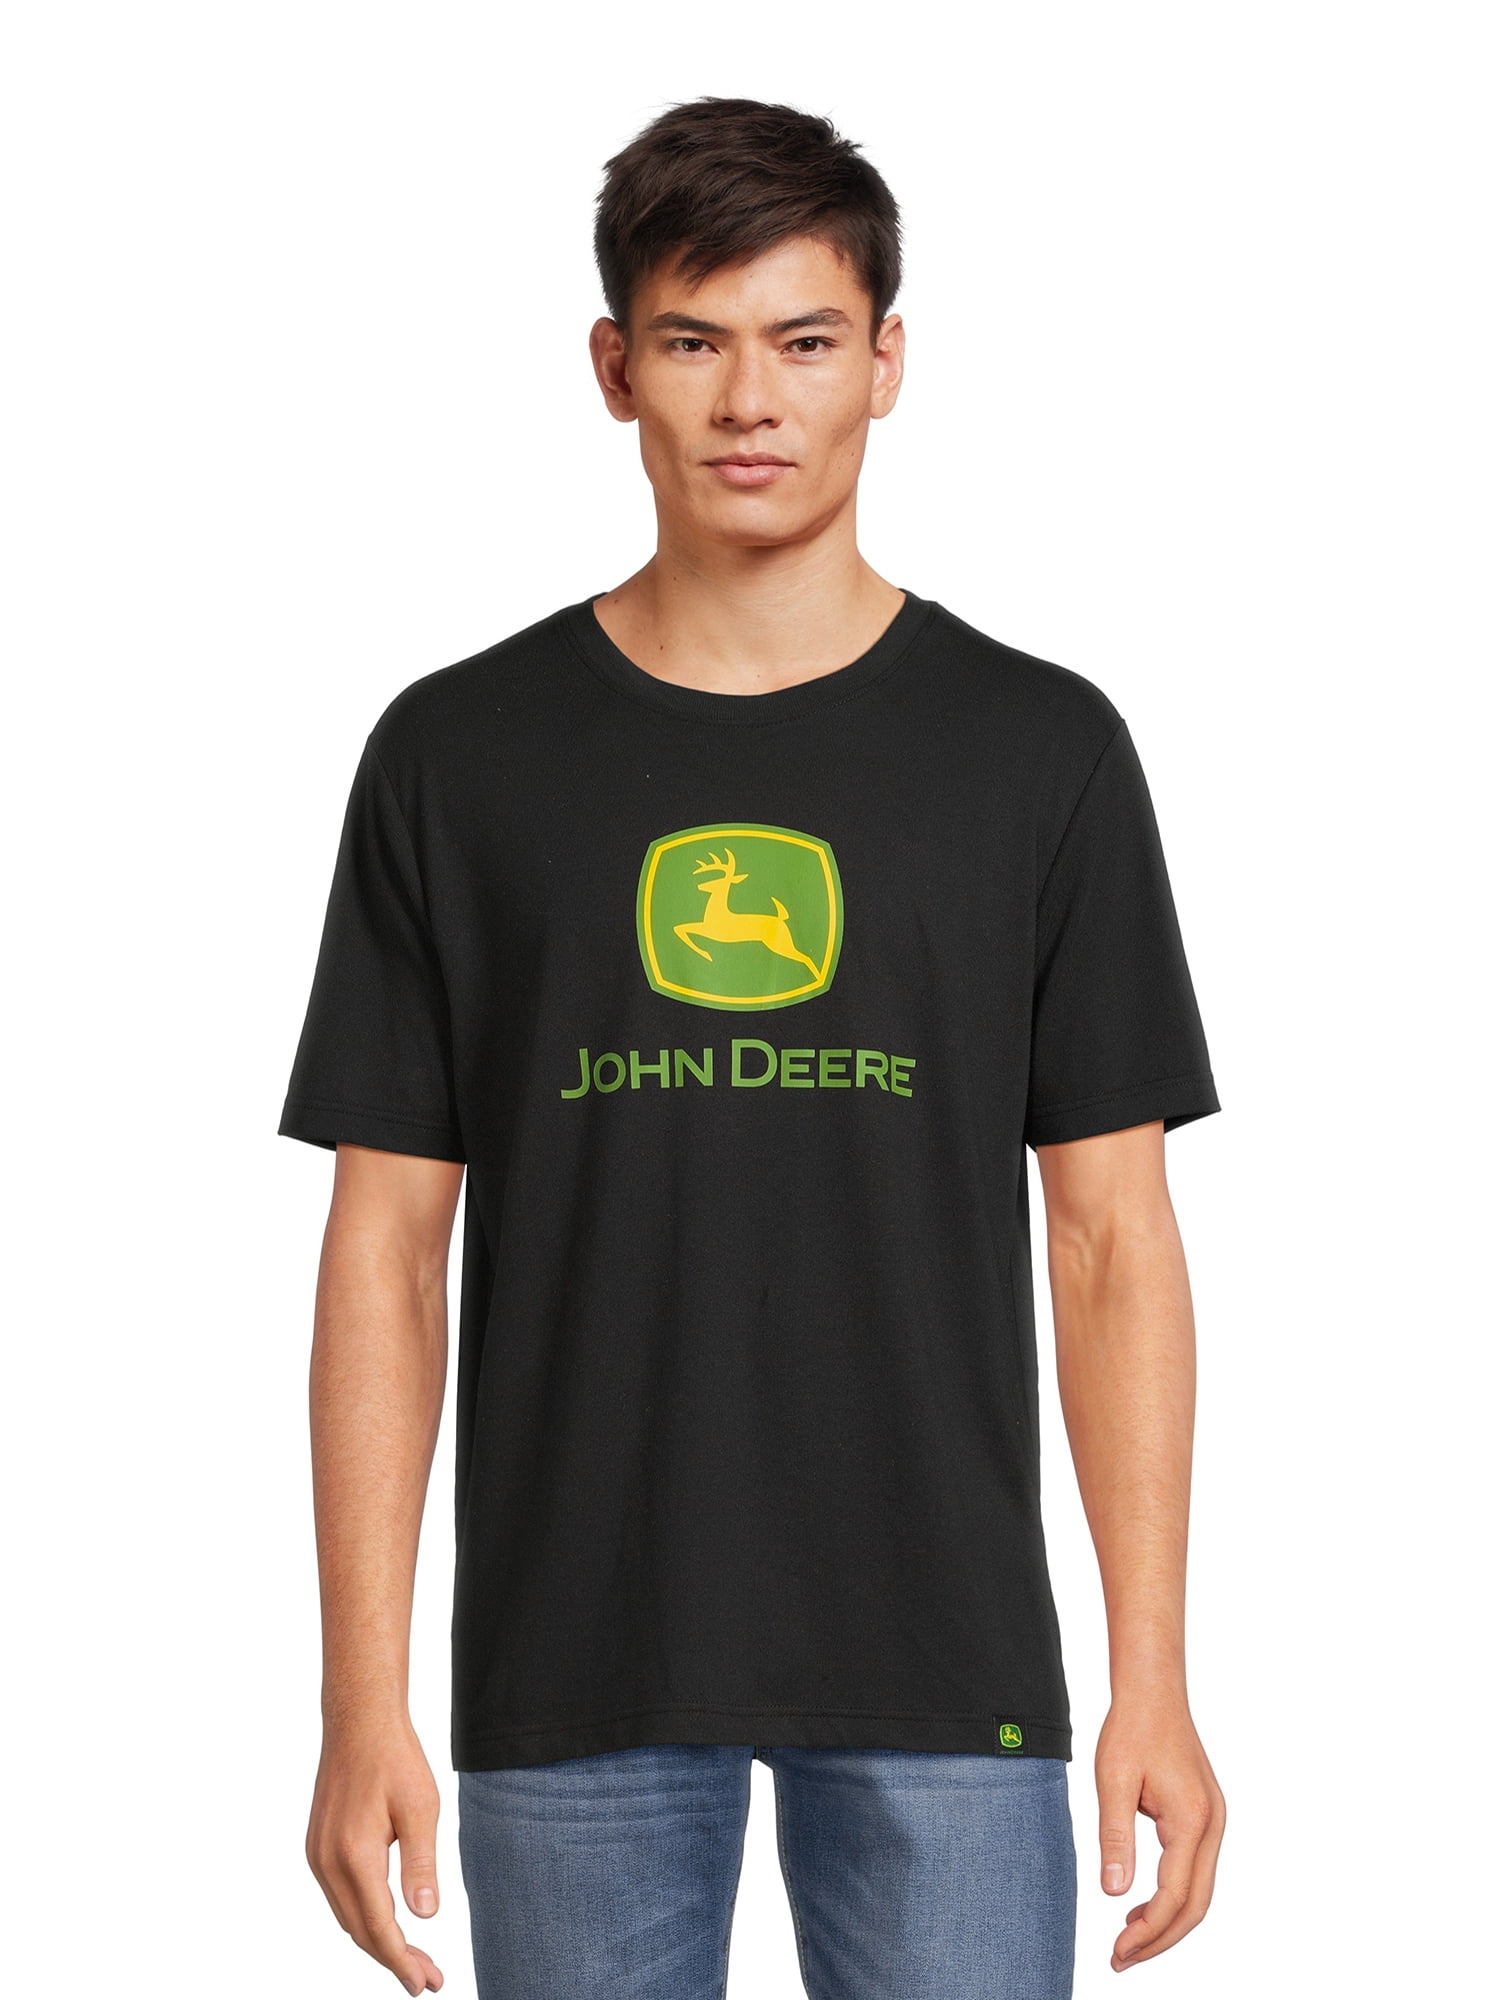 John Deere Young Men’s Graphic Jersey Short Sleeve Tee T-Shirt up to ...